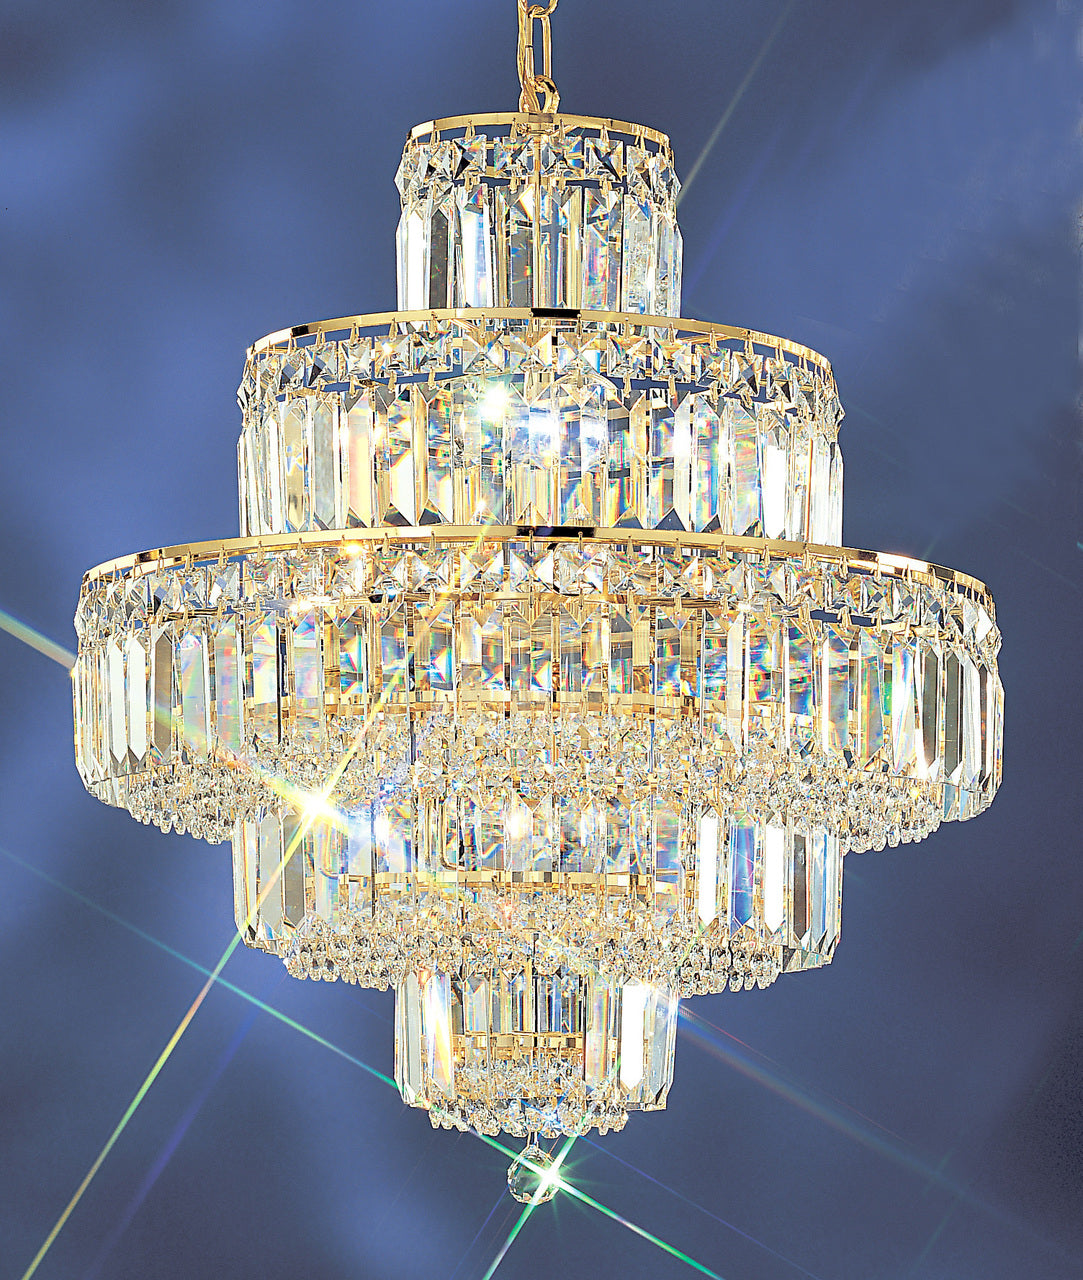 Classic Lighting 1601 G S Ambassador Crystal Chandelier in 24k Gold